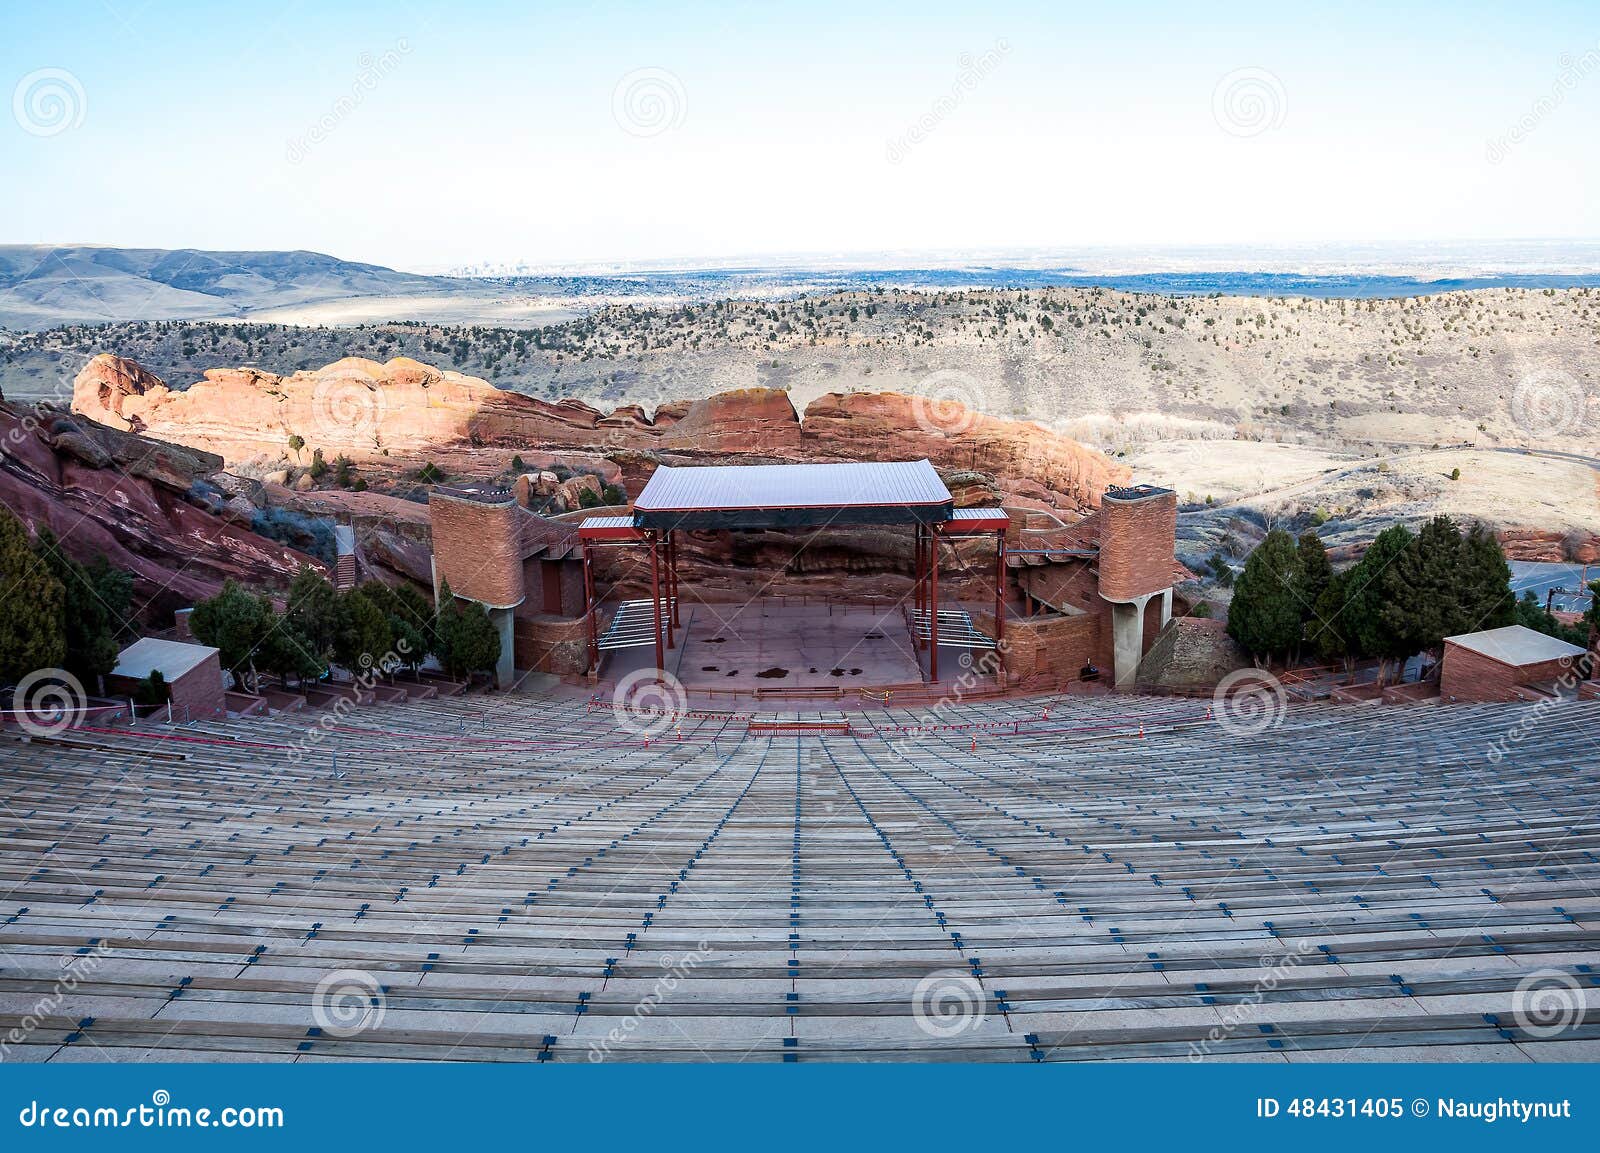 historic red rocks amphitheater near denver, colorado